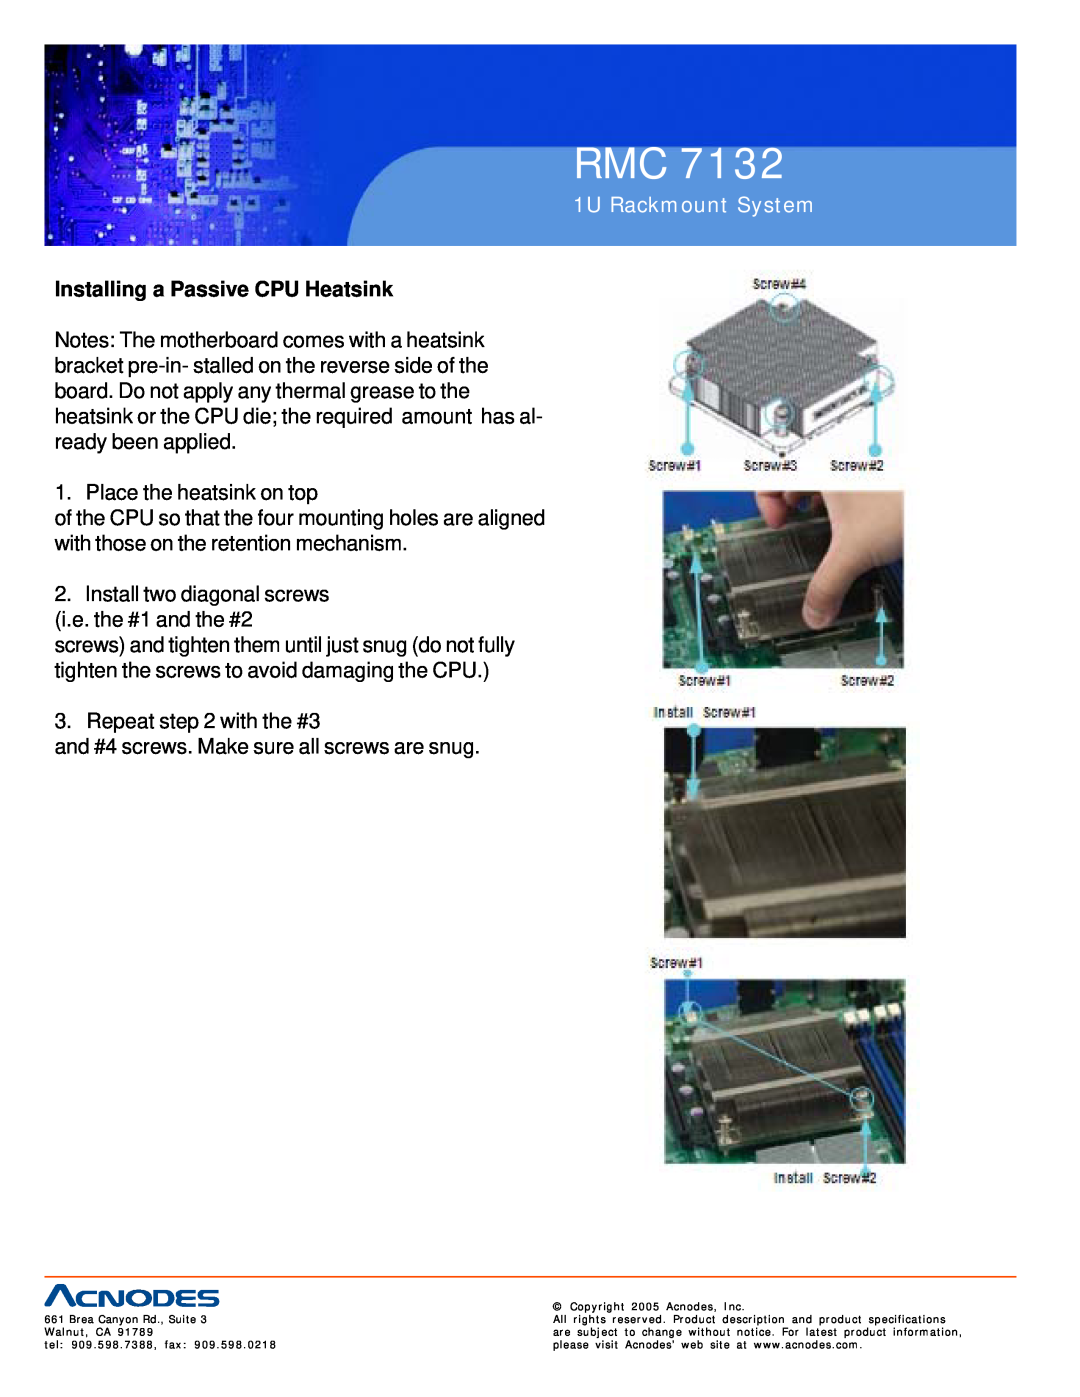 Acnodes RMC 7132 user manual Installing a Passive CPU Heatsink, 1U Rackmount System 